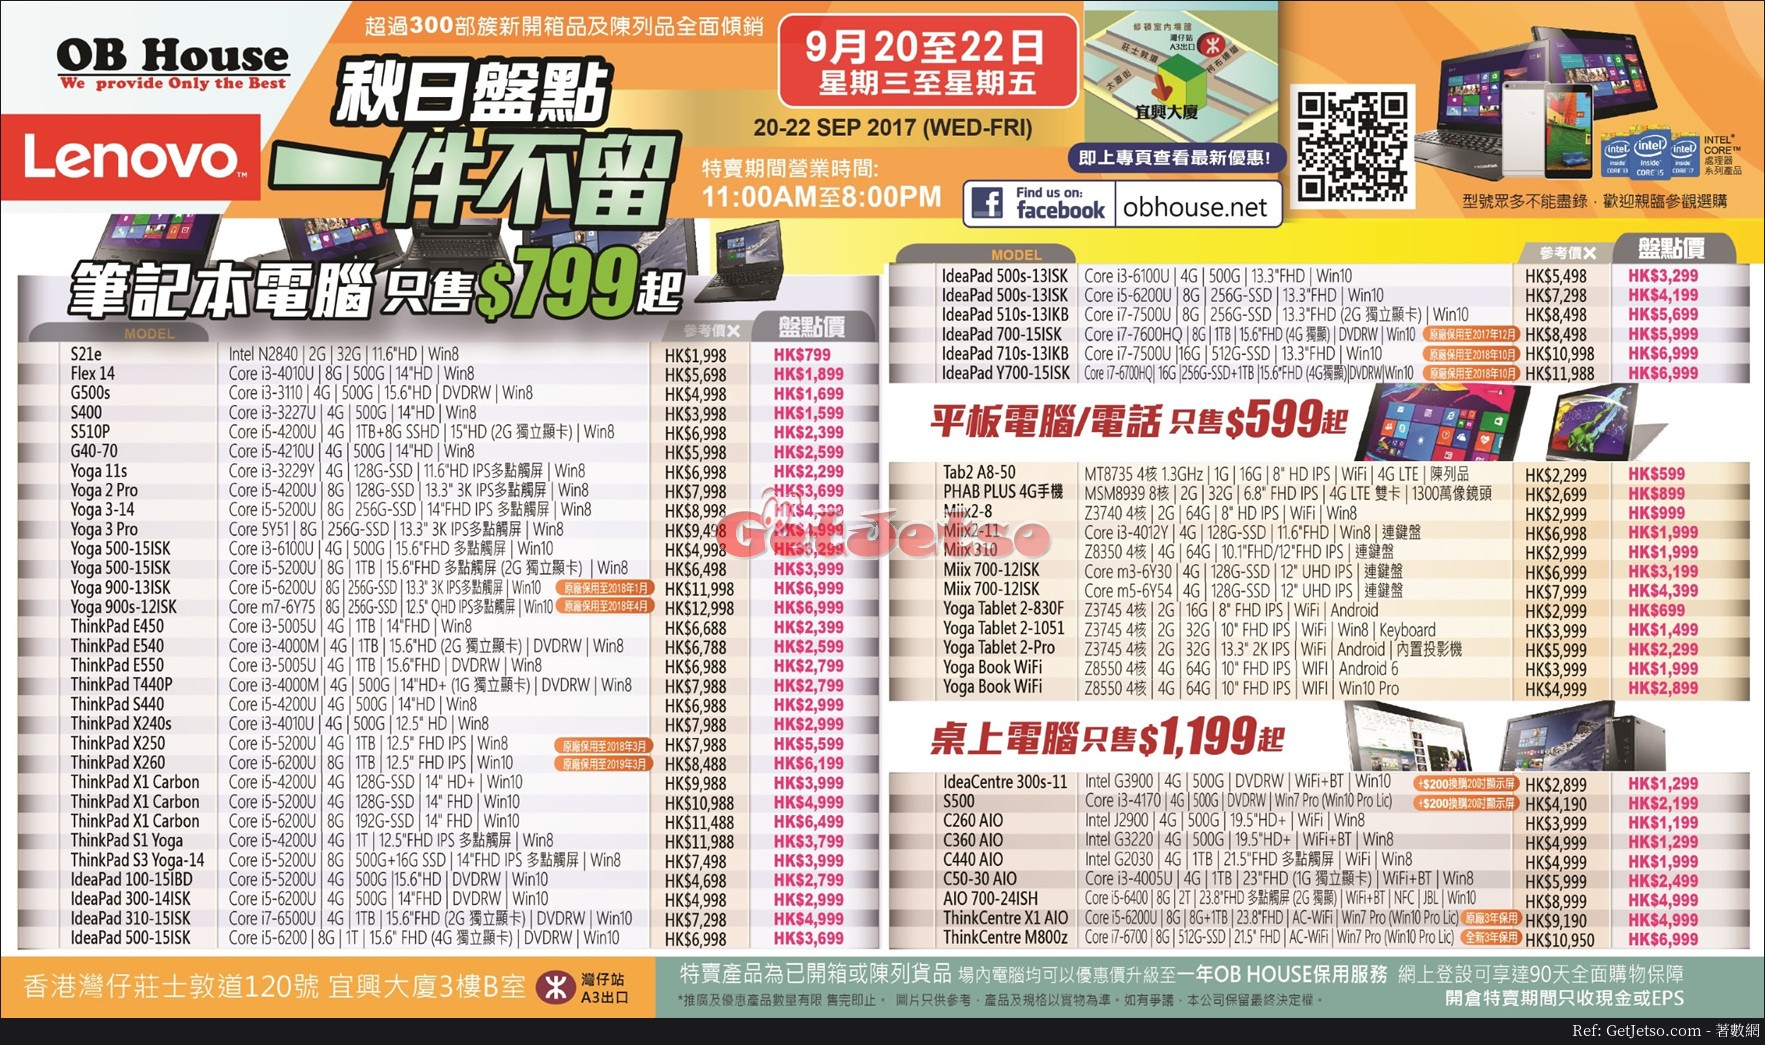 Lenovo 電腦、平板低至9 減價優惠(17年9月20-22日)圖片1